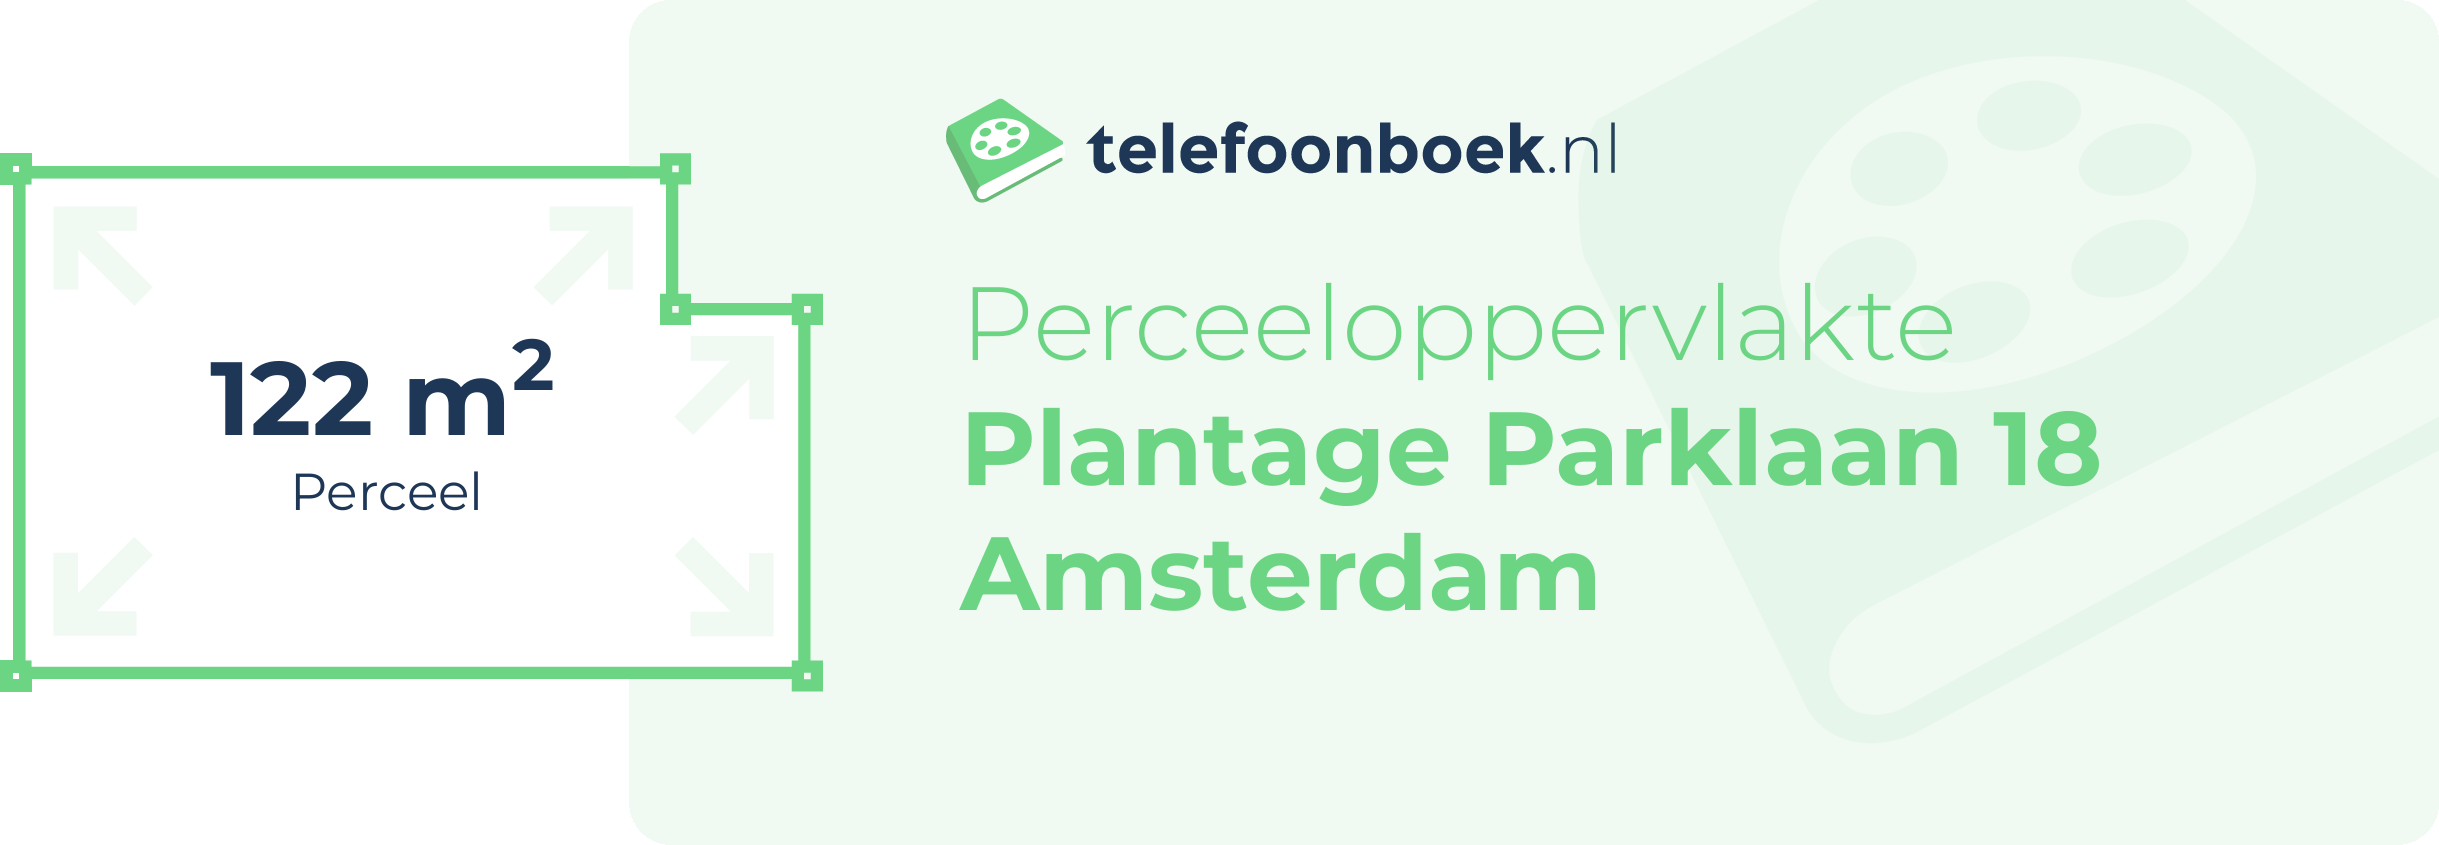 Perceeloppervlakte Plantage Parklaan 18 Amsterdam